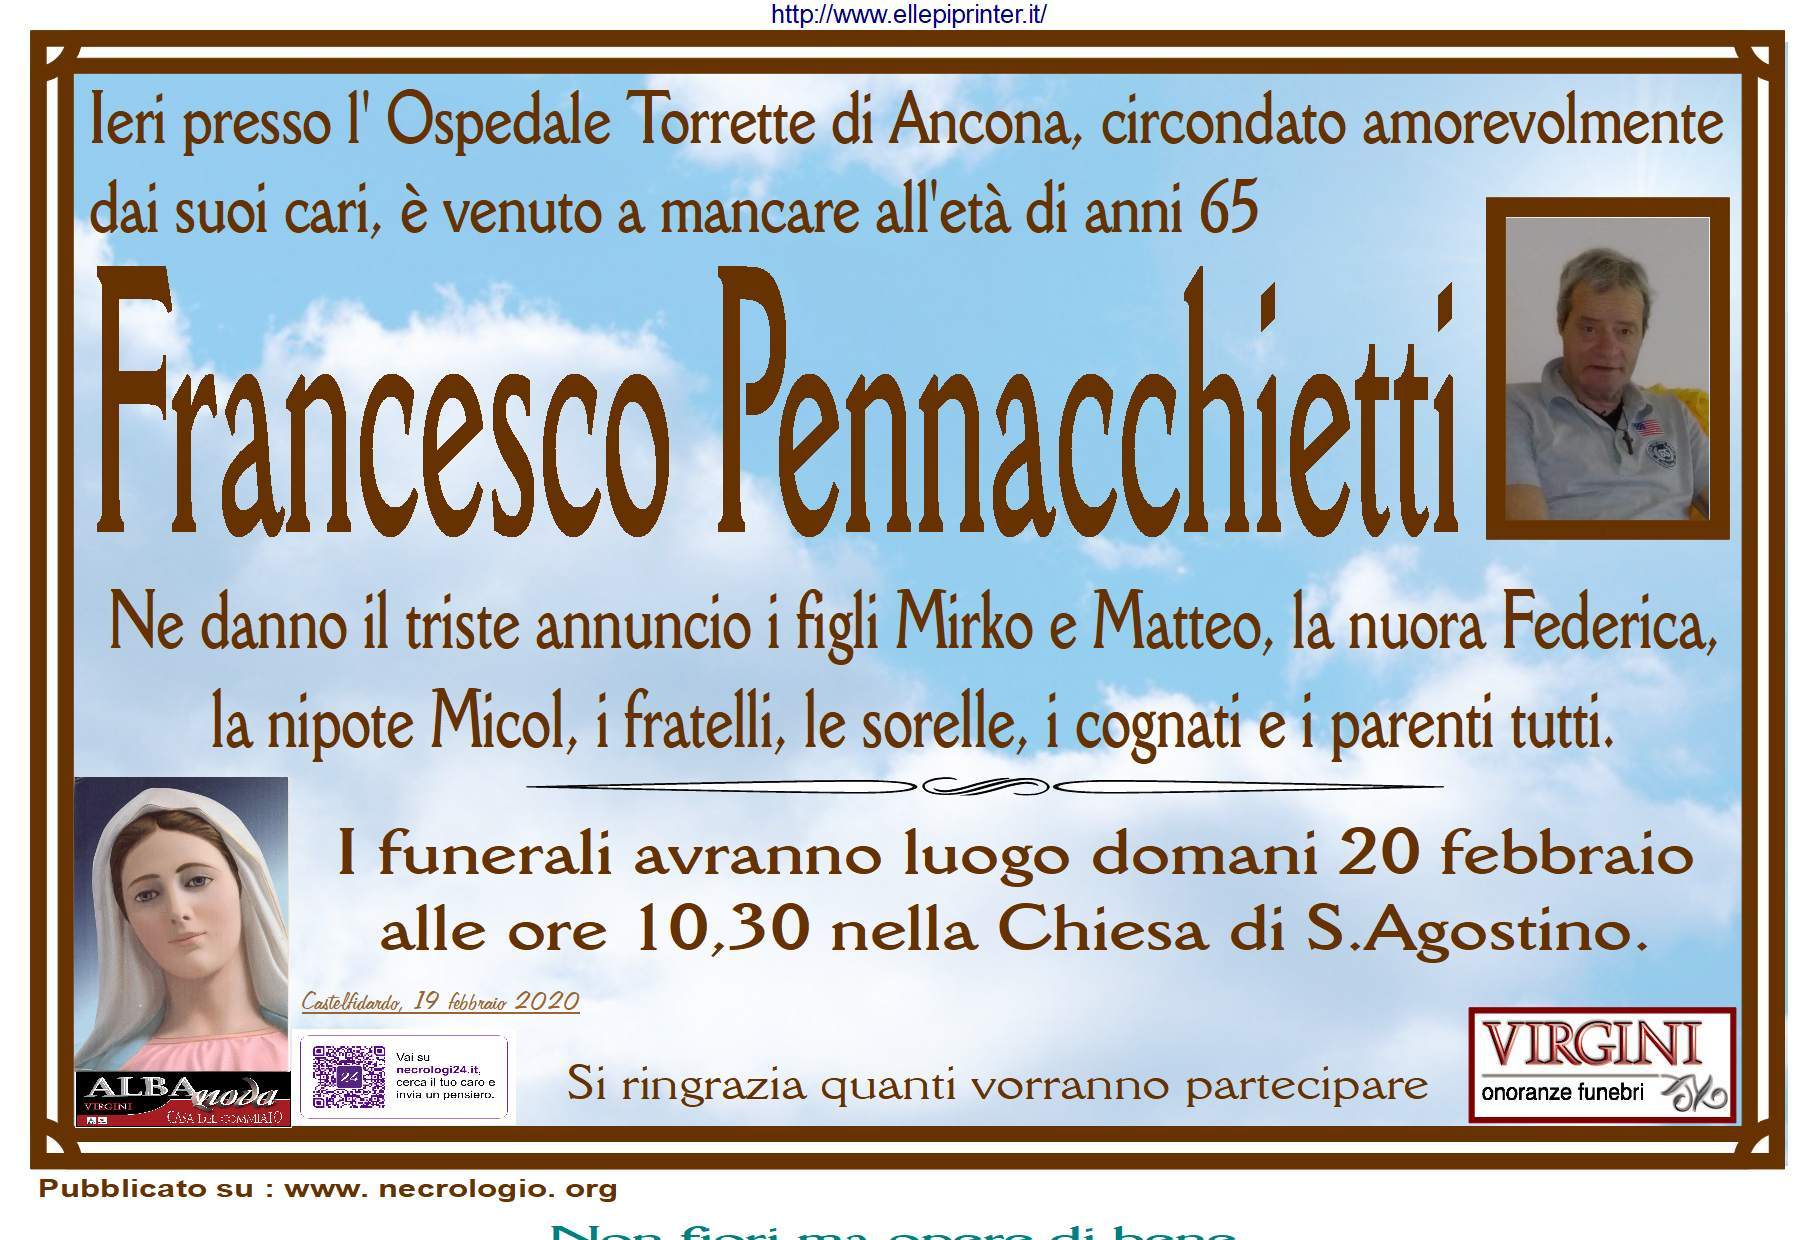 Francesco Pennacchietti